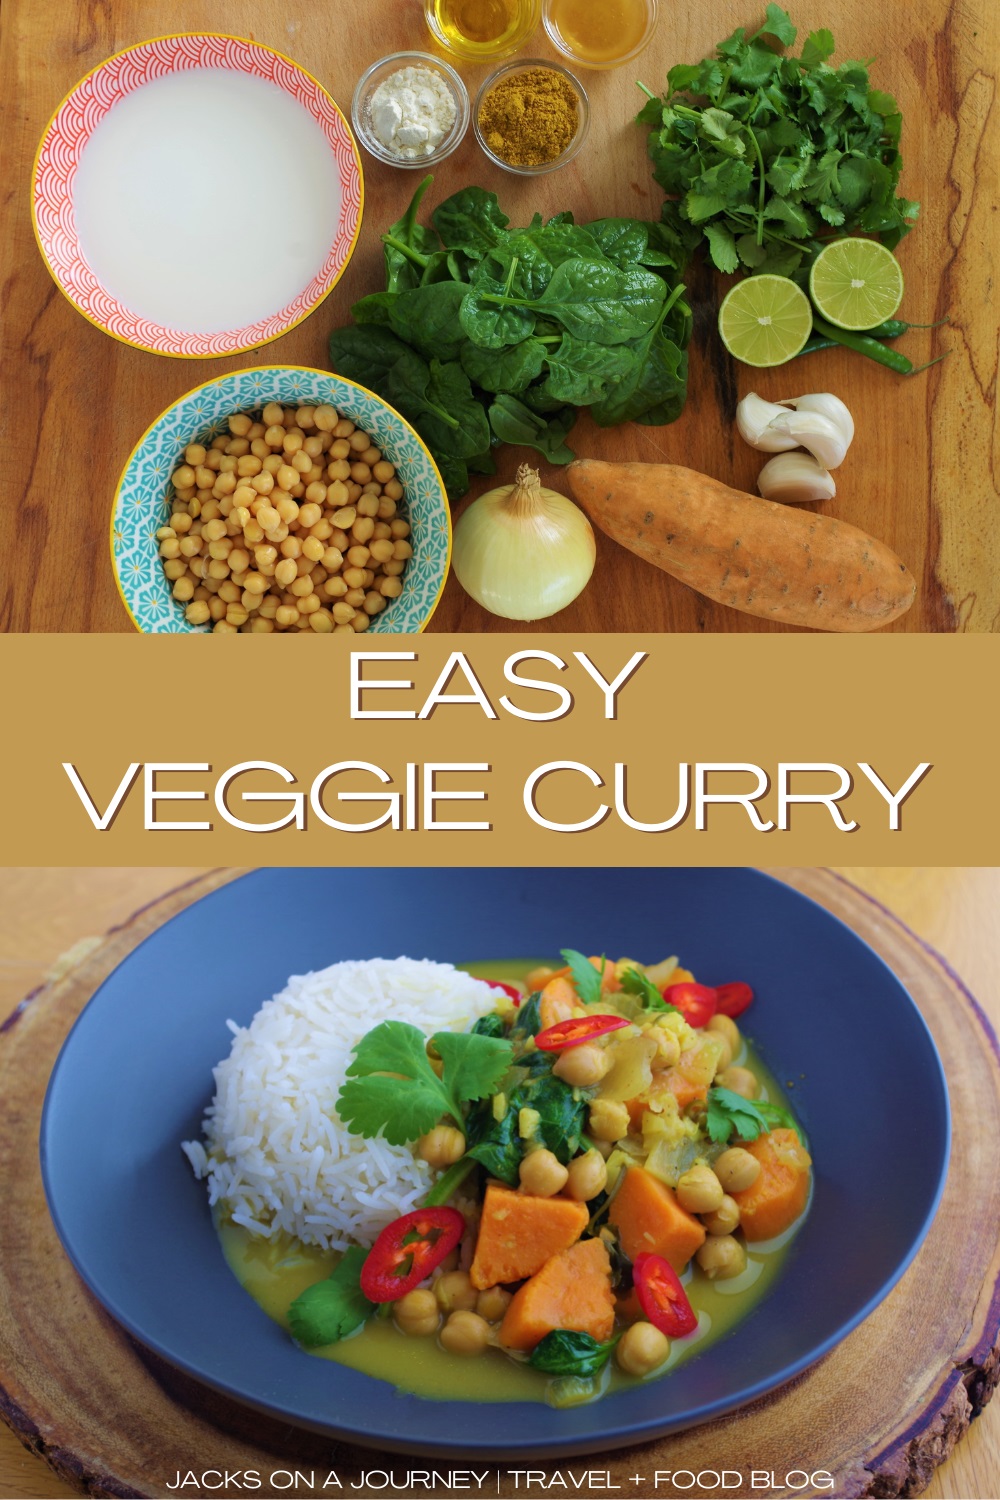 Easy Veggie Curry - Jacks on a Journey | Travel + Food Blog